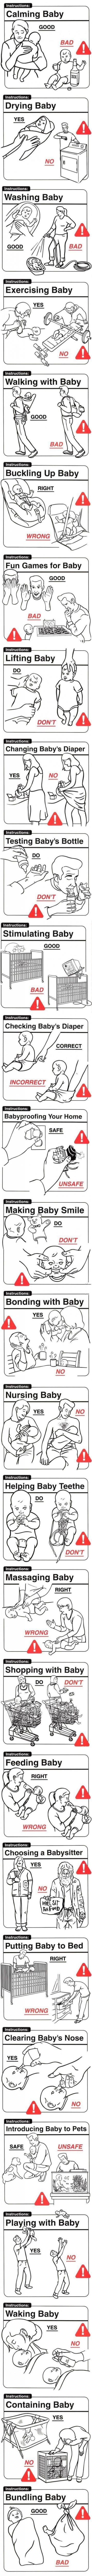 Parenting Instructions 